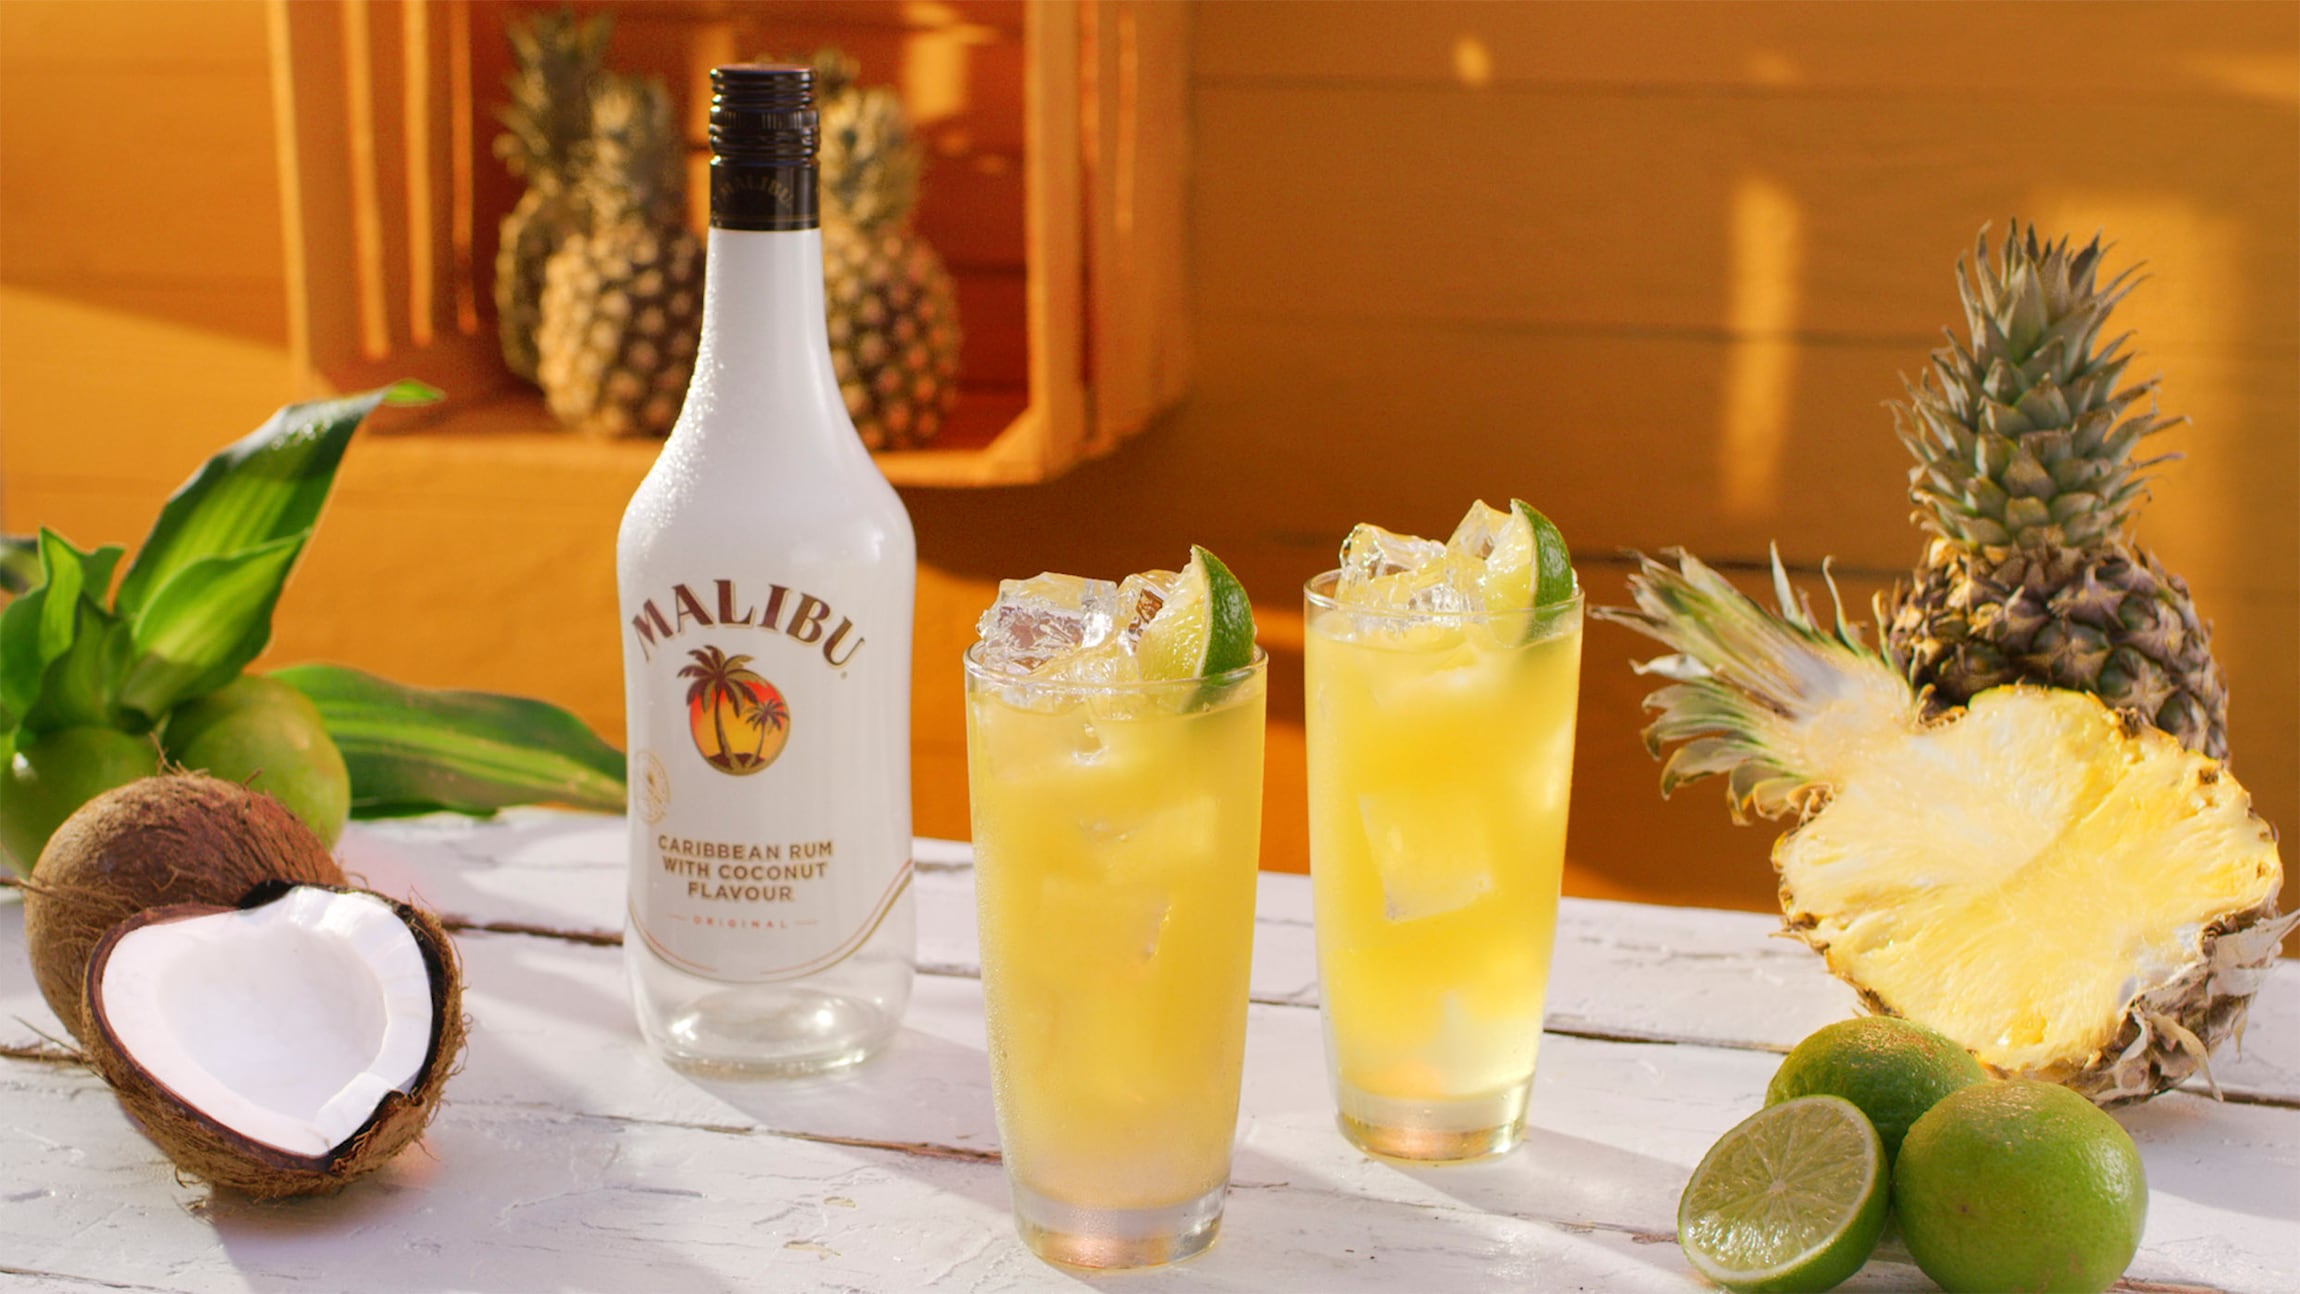 Malibu Rum Drink Recipes With Pineapple Juice